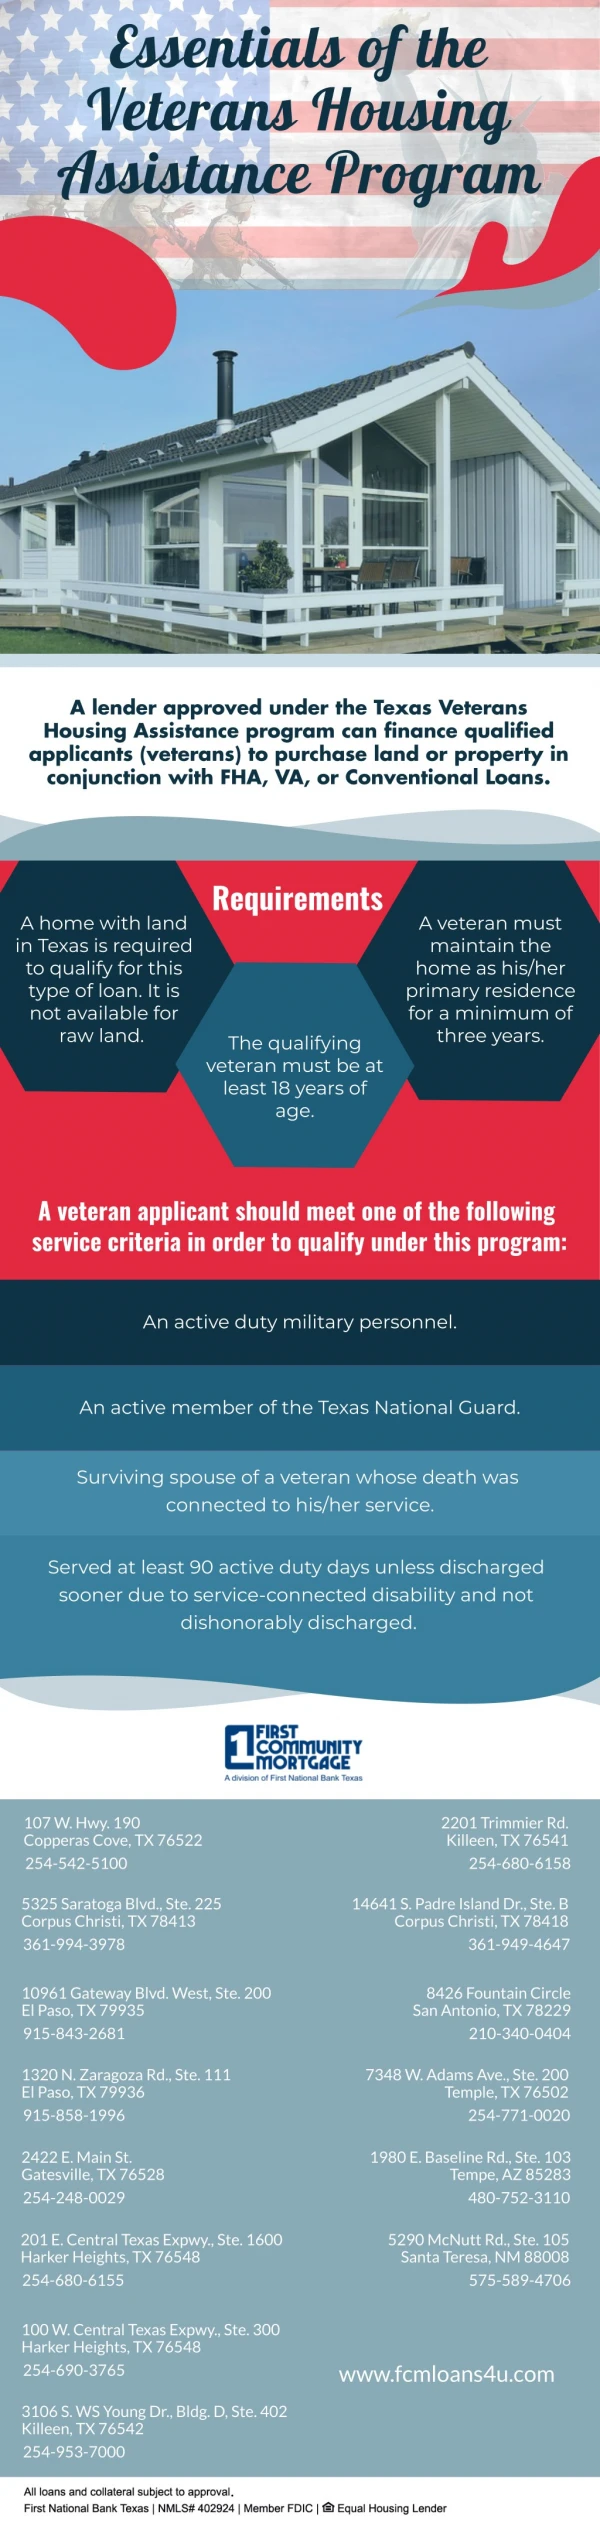 Essentials Of The Veterans Housing Assistance Program